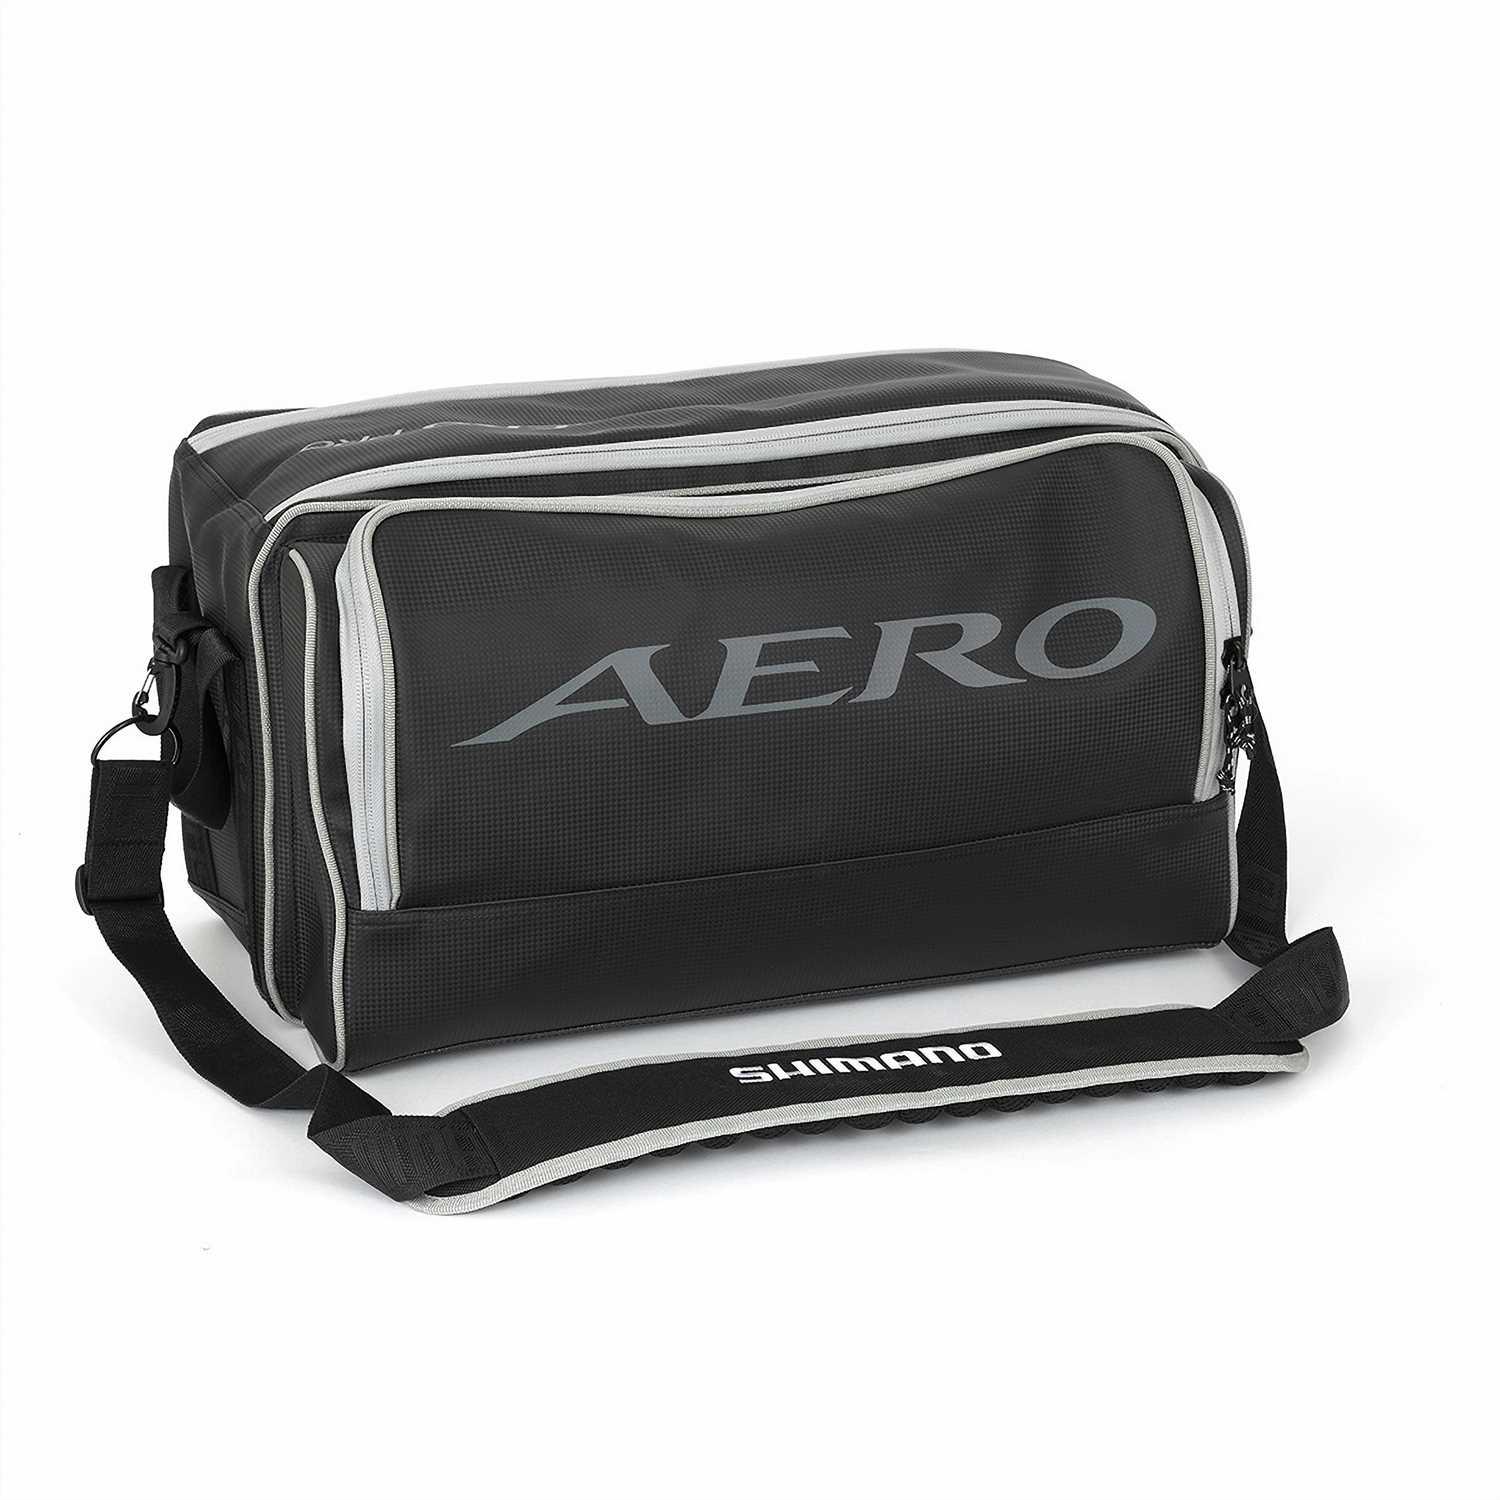 Rockland Aero 3-Piece Black Hardside Spinner Luggage Set F244-BLACK - The  Home Depot